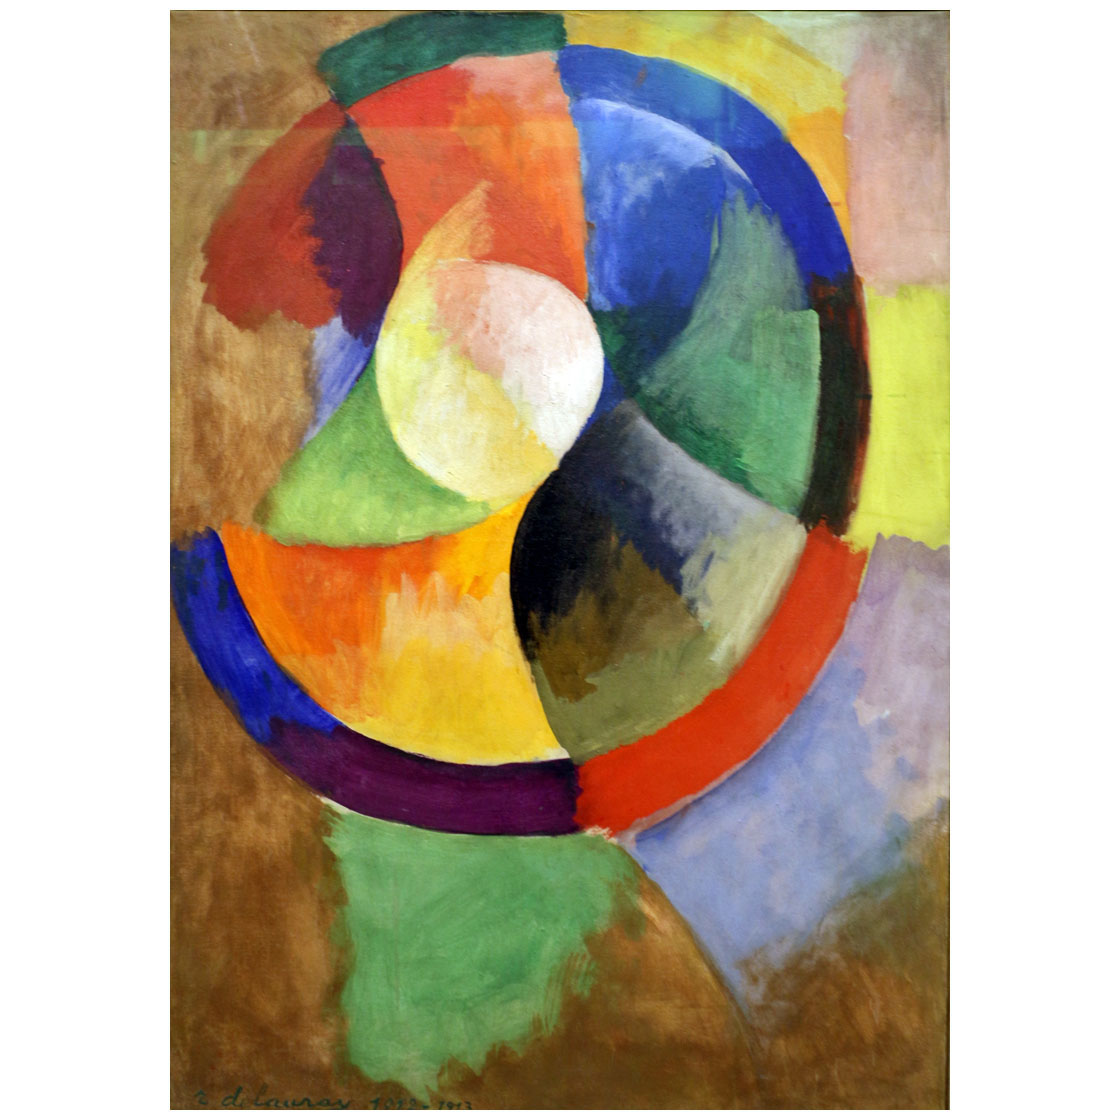 Robert Delaunay. Circular Forms. Soleil No.2. 1910. Centre Pompidou Paris